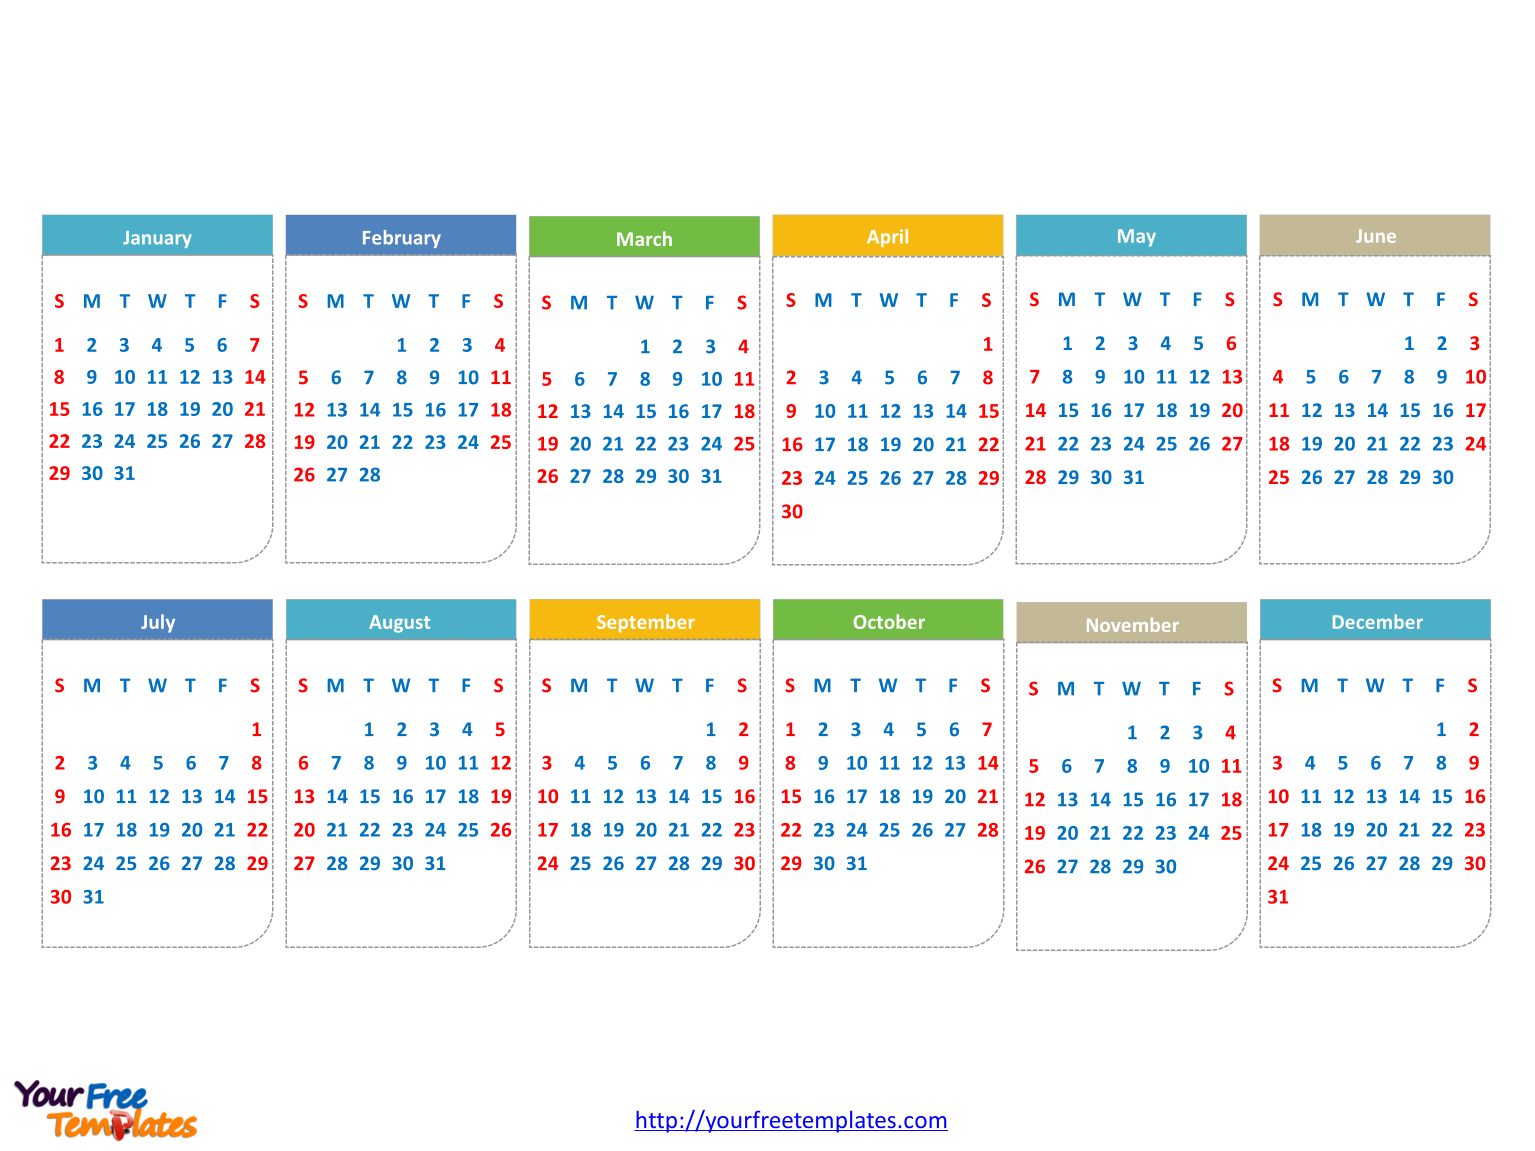 Powerpoint Calendar Template 2017 from yourfreetemplates.com